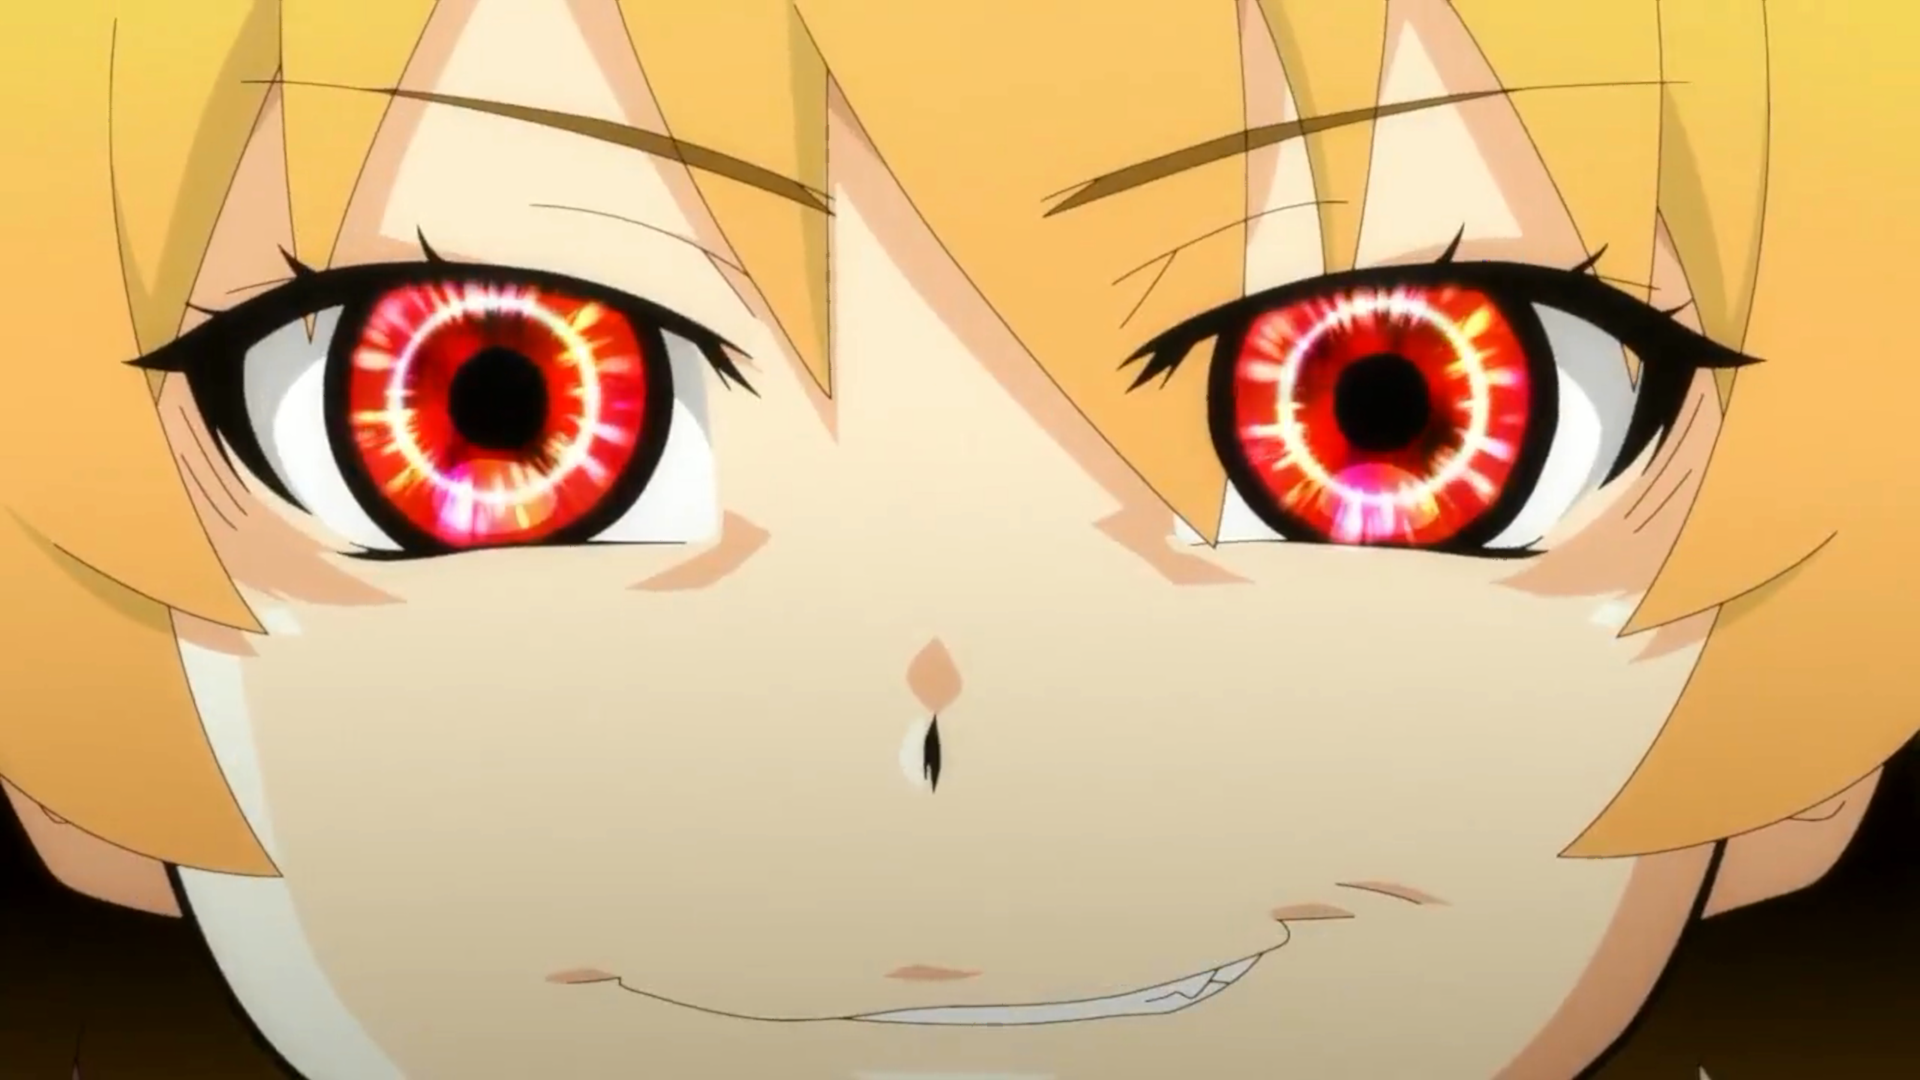 Higurashi: Sotsu Key Visual, Trailer Revealed - Anime Corner